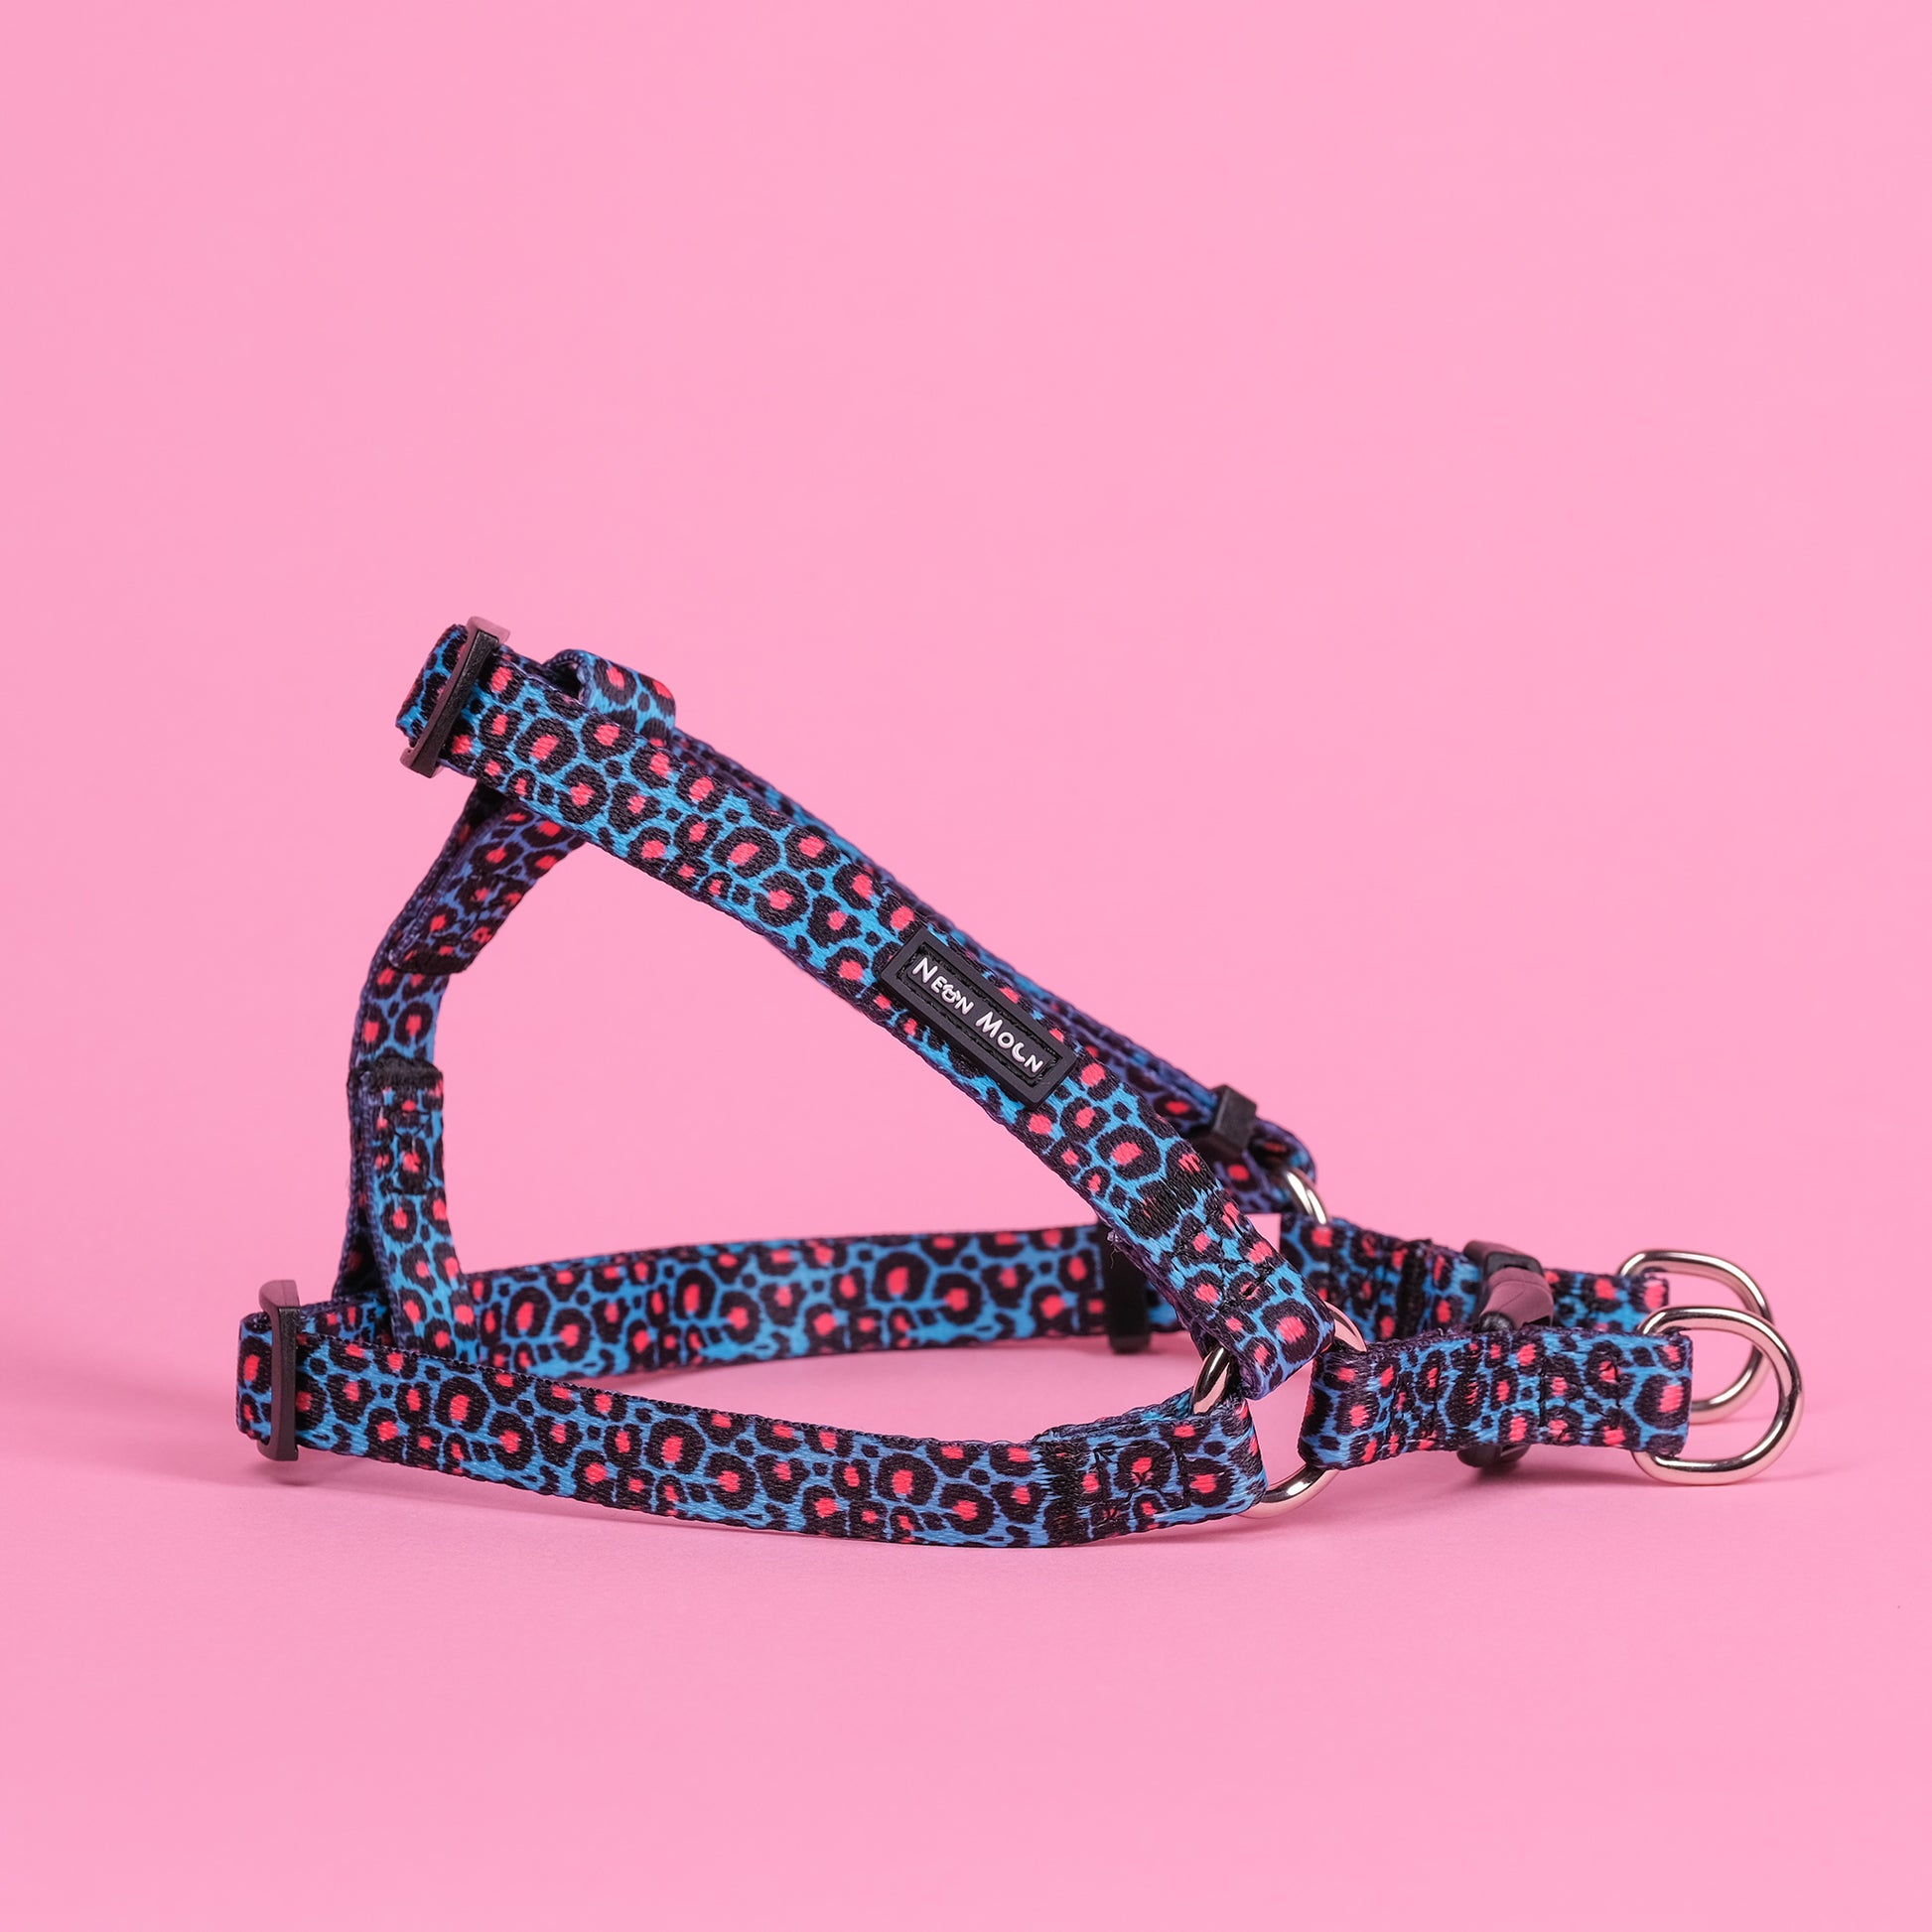 Blue leopard print step-in dog harness